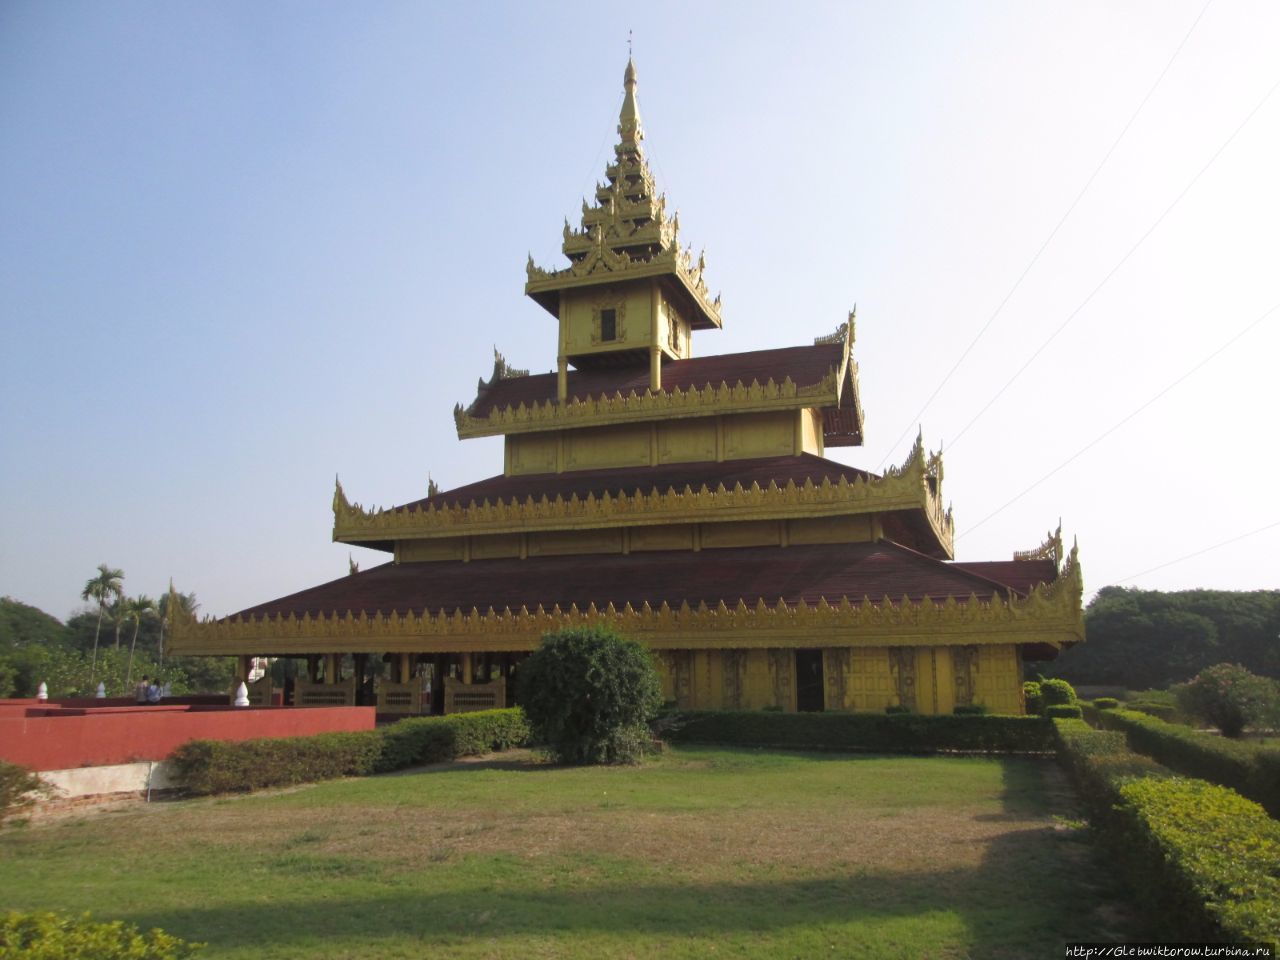 Прогулка по территории дворца-новодела Шуэбо, Мьянма